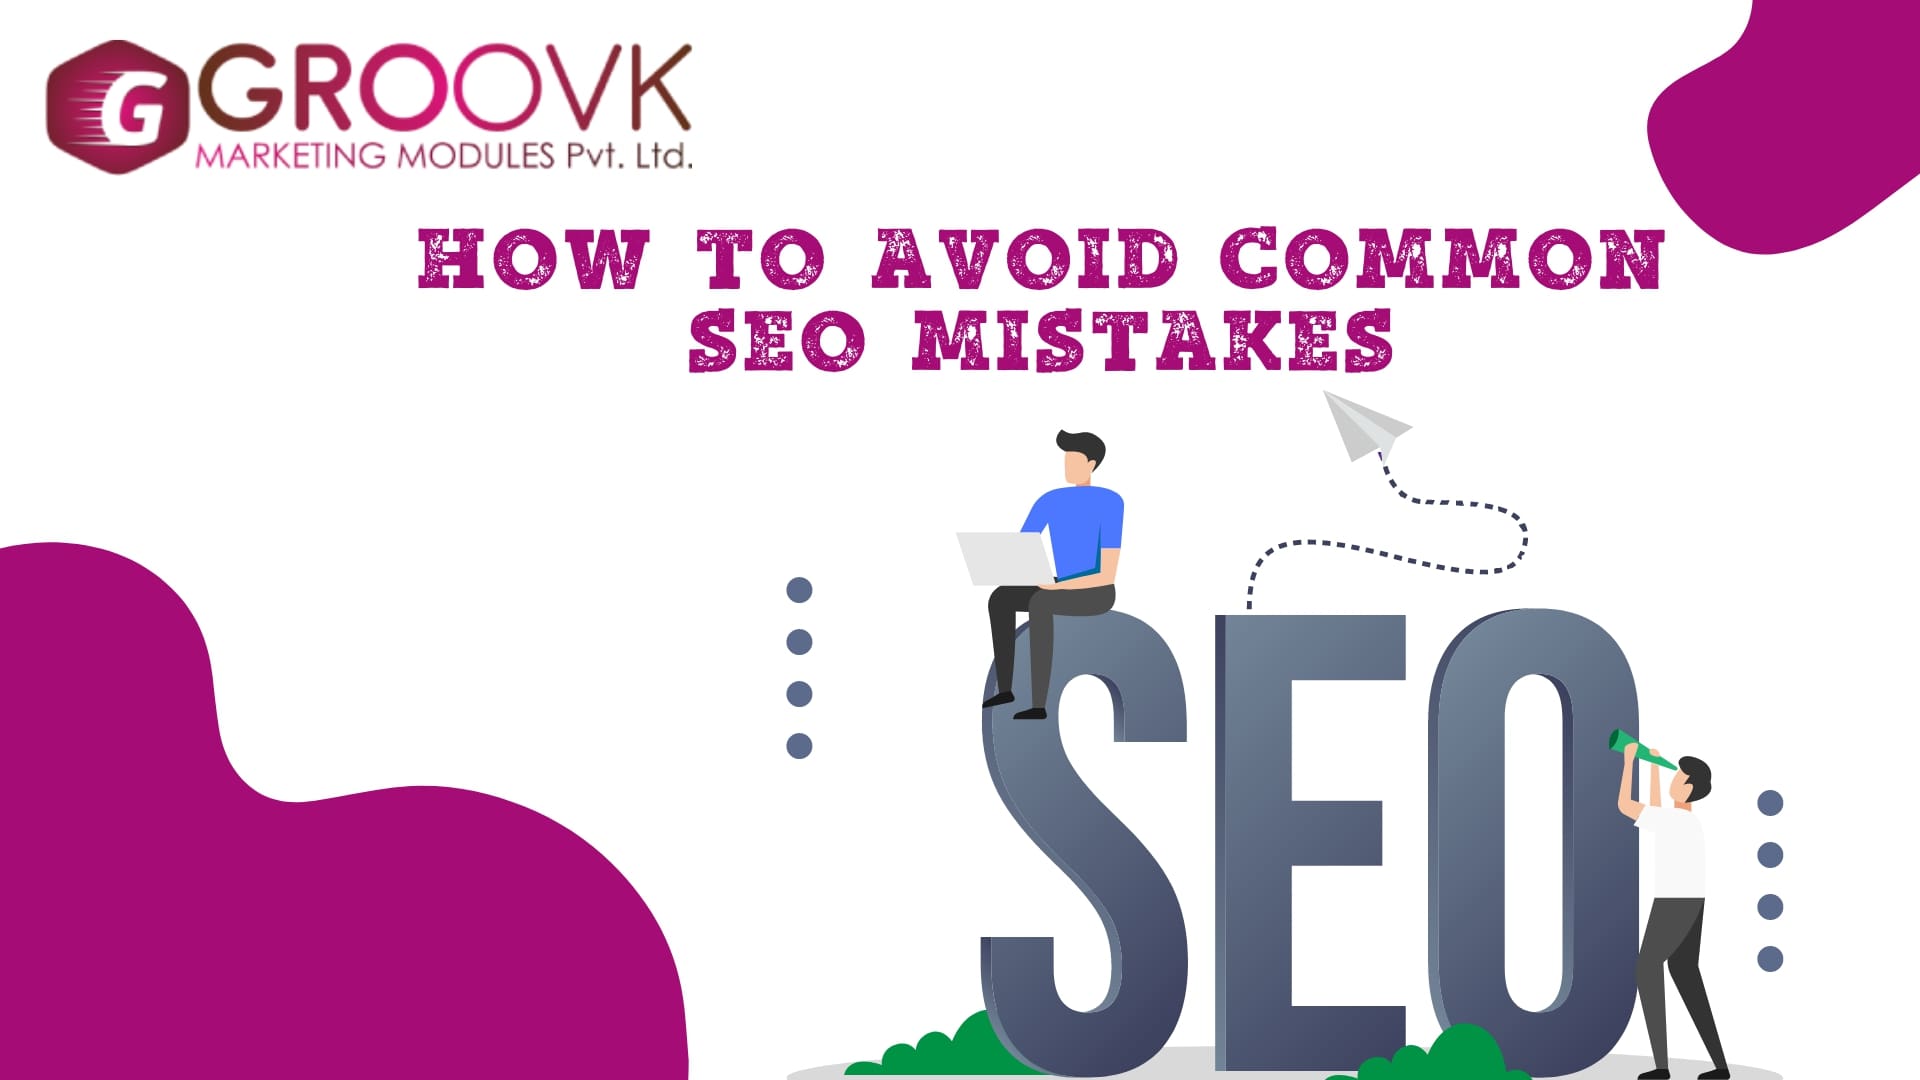 Common SEO Mistakes to Avoid - Groovk Marketing

								